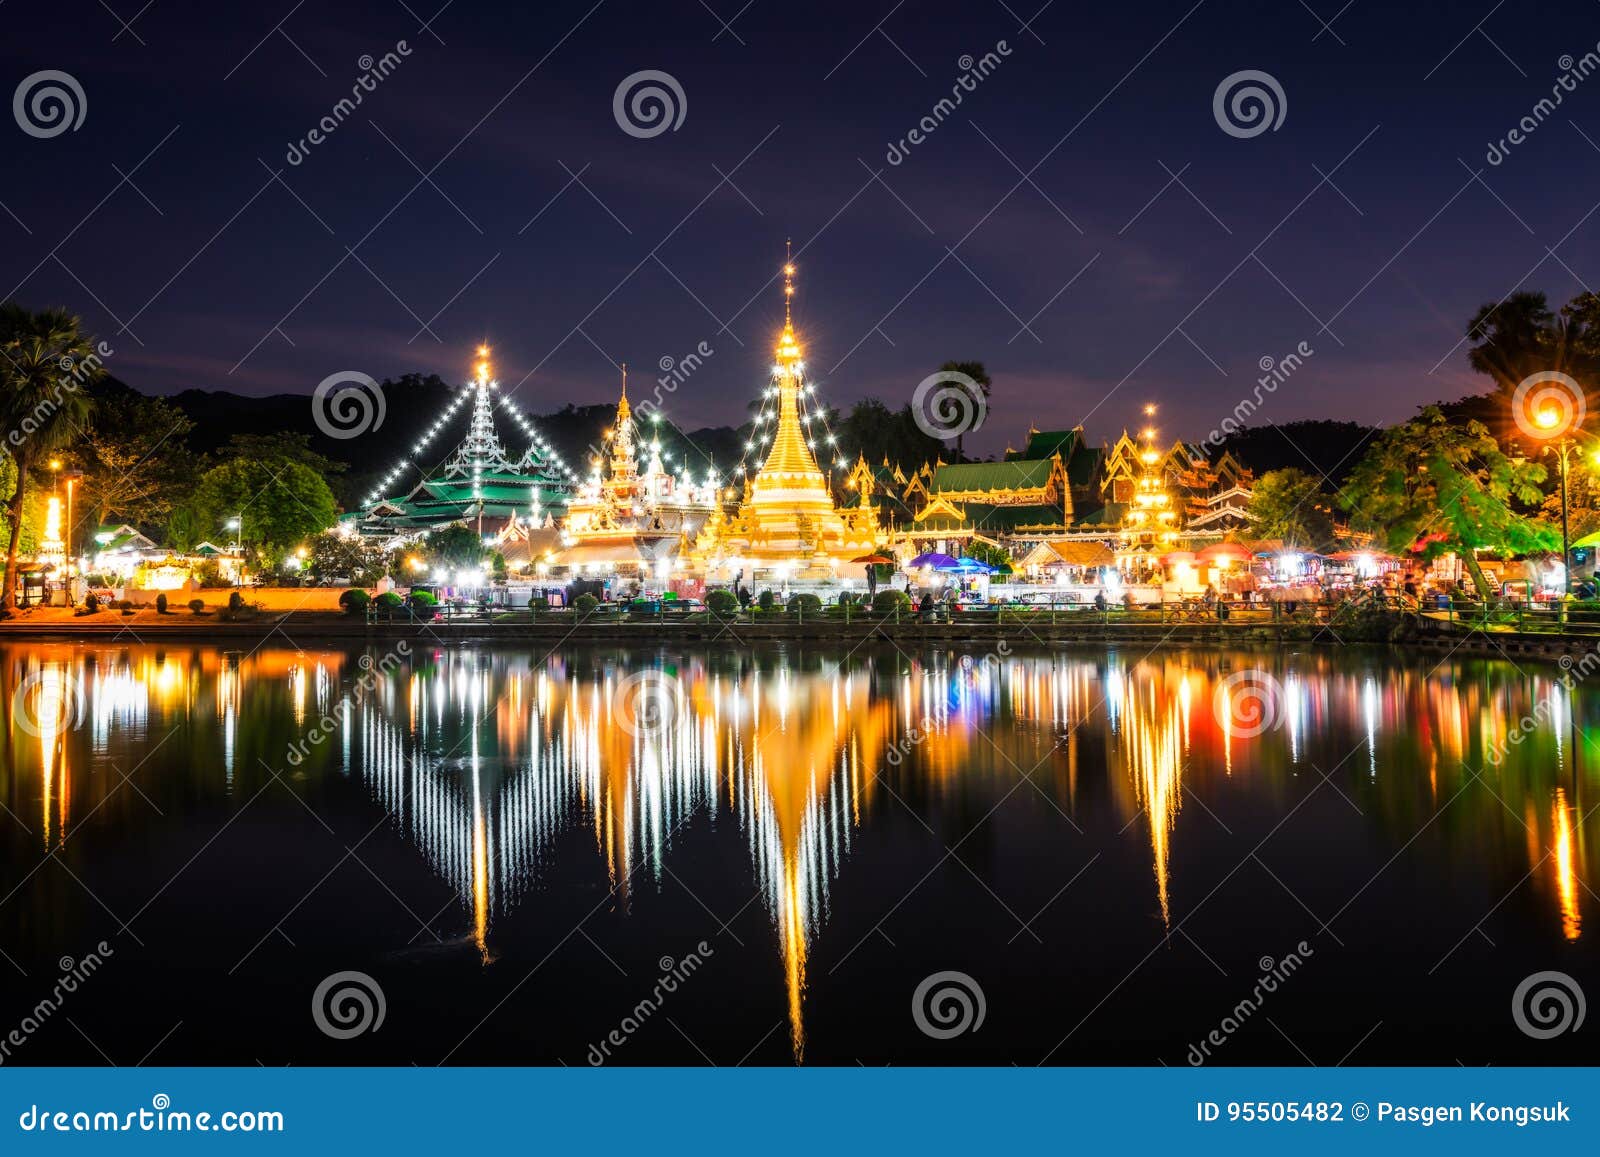 water reflections of wat phra that nhong jong kham temple